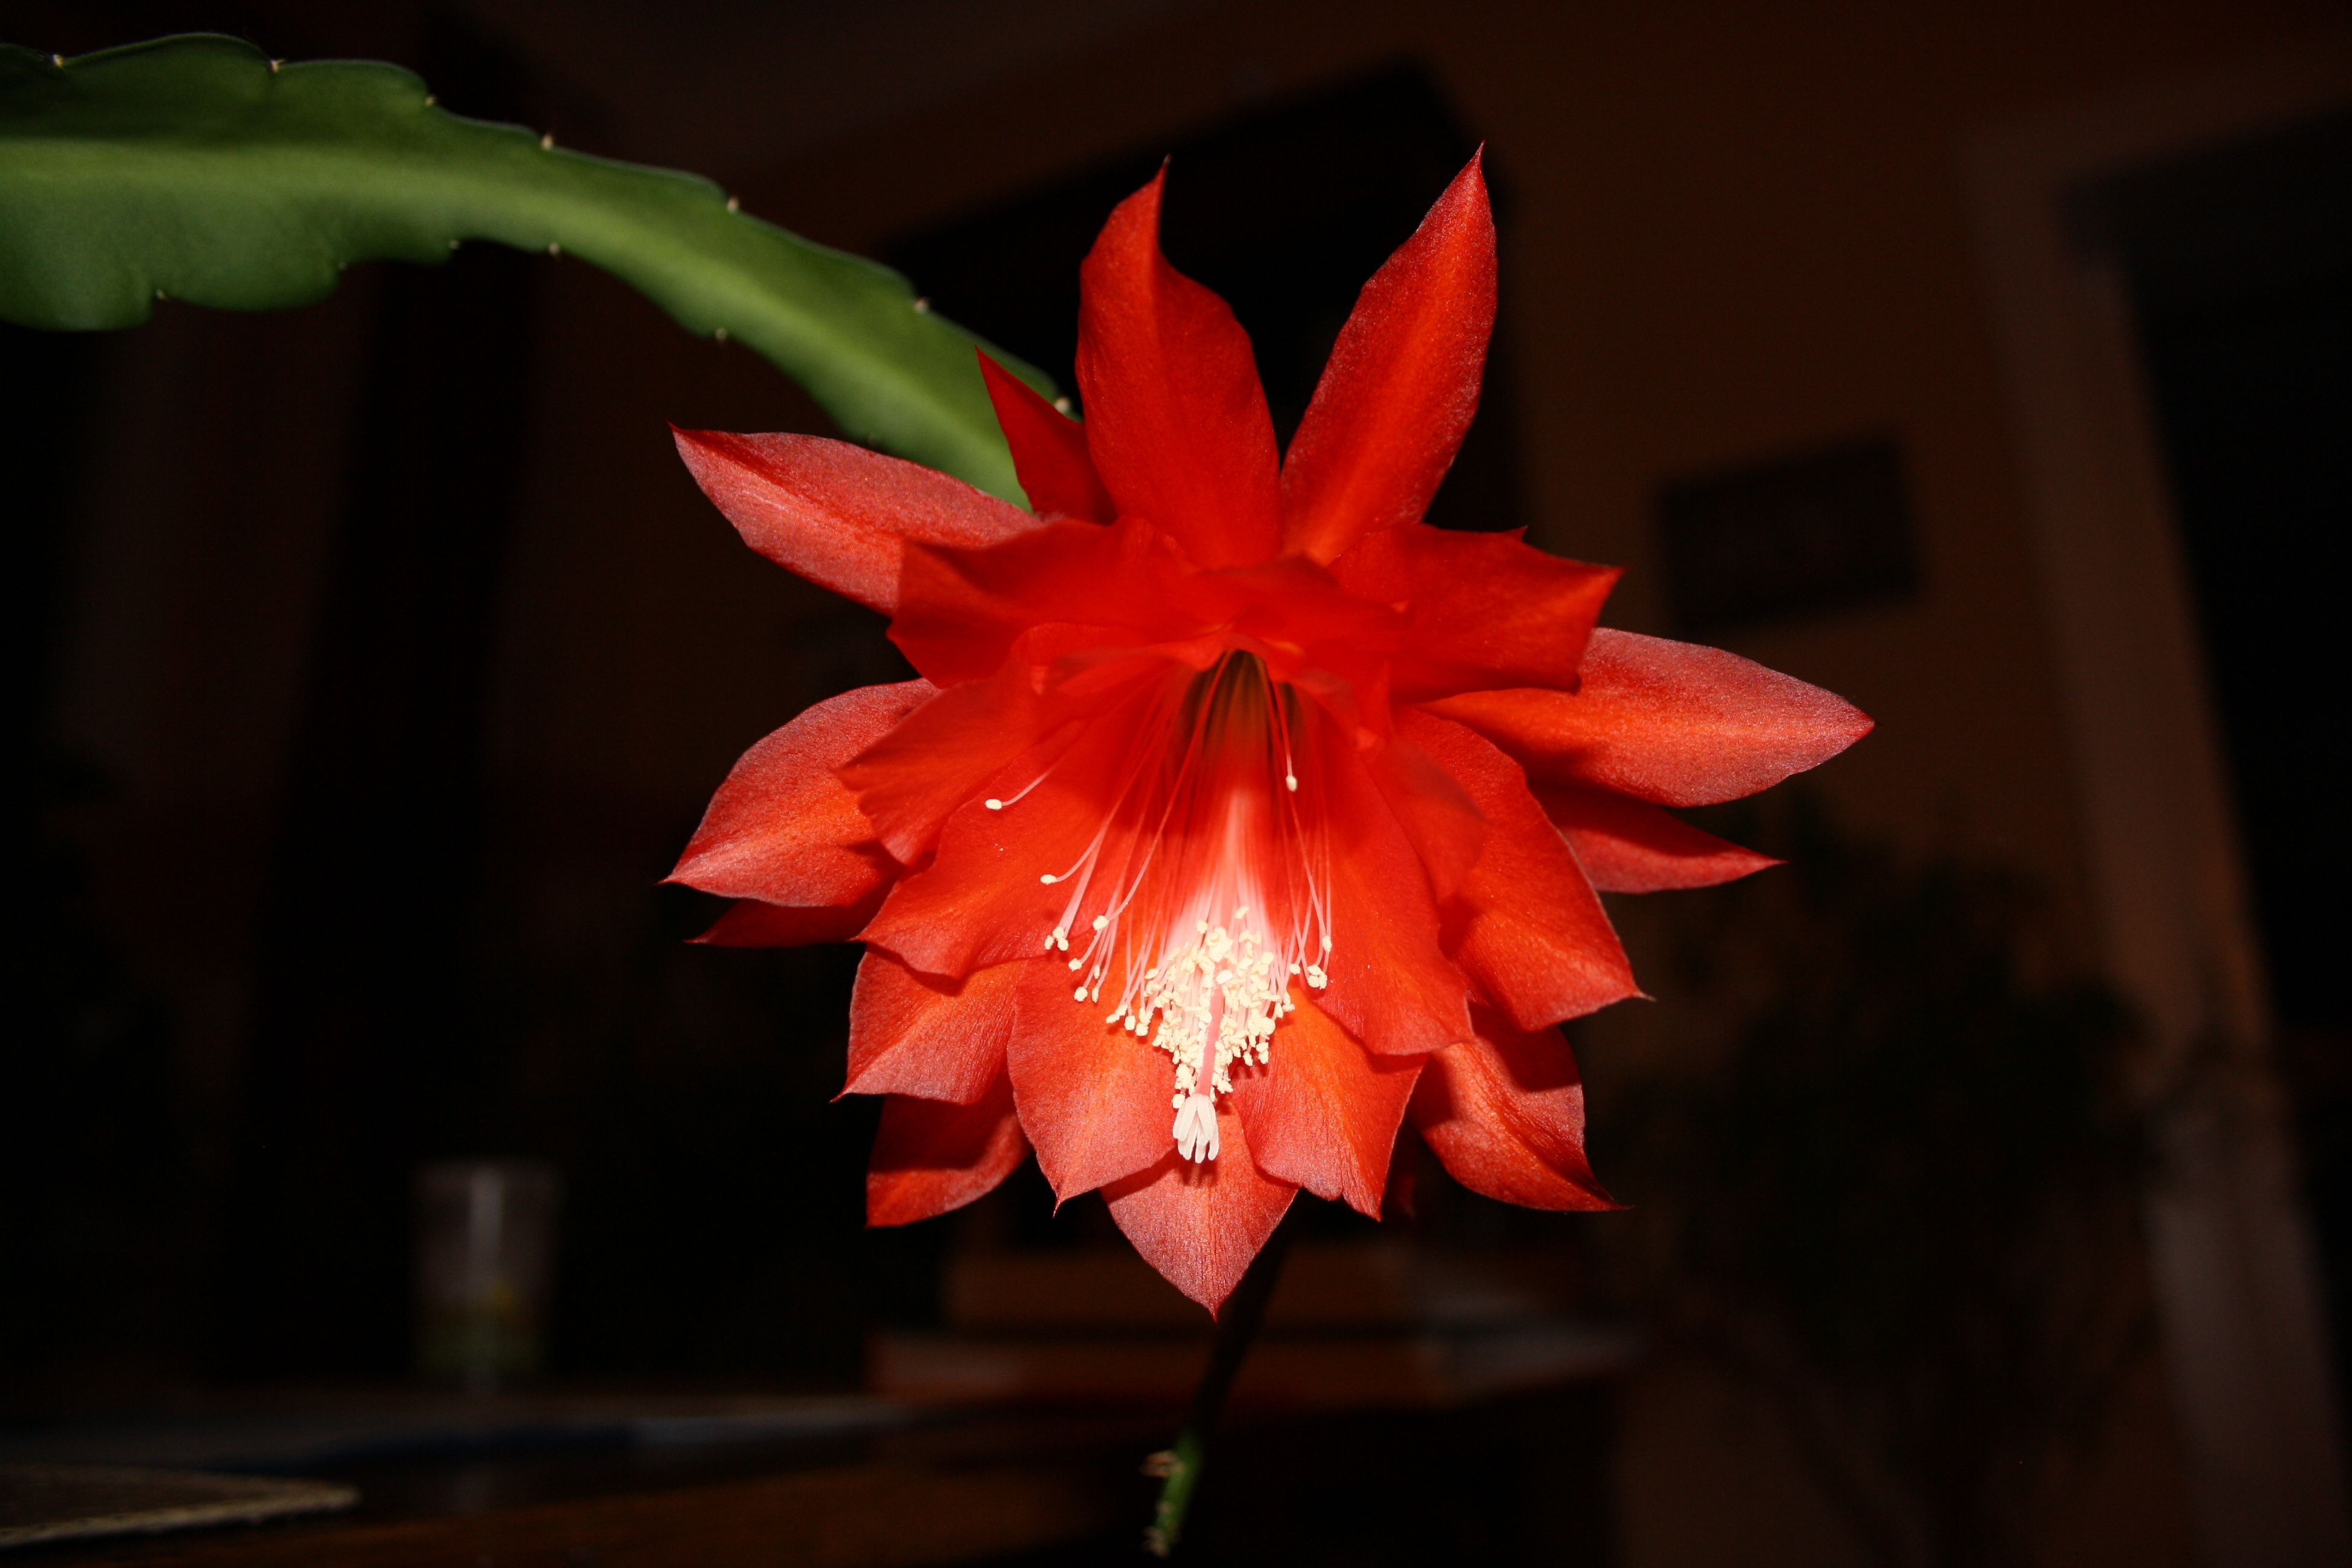 Free photo: Red cactus flowers, Cactus, Flower